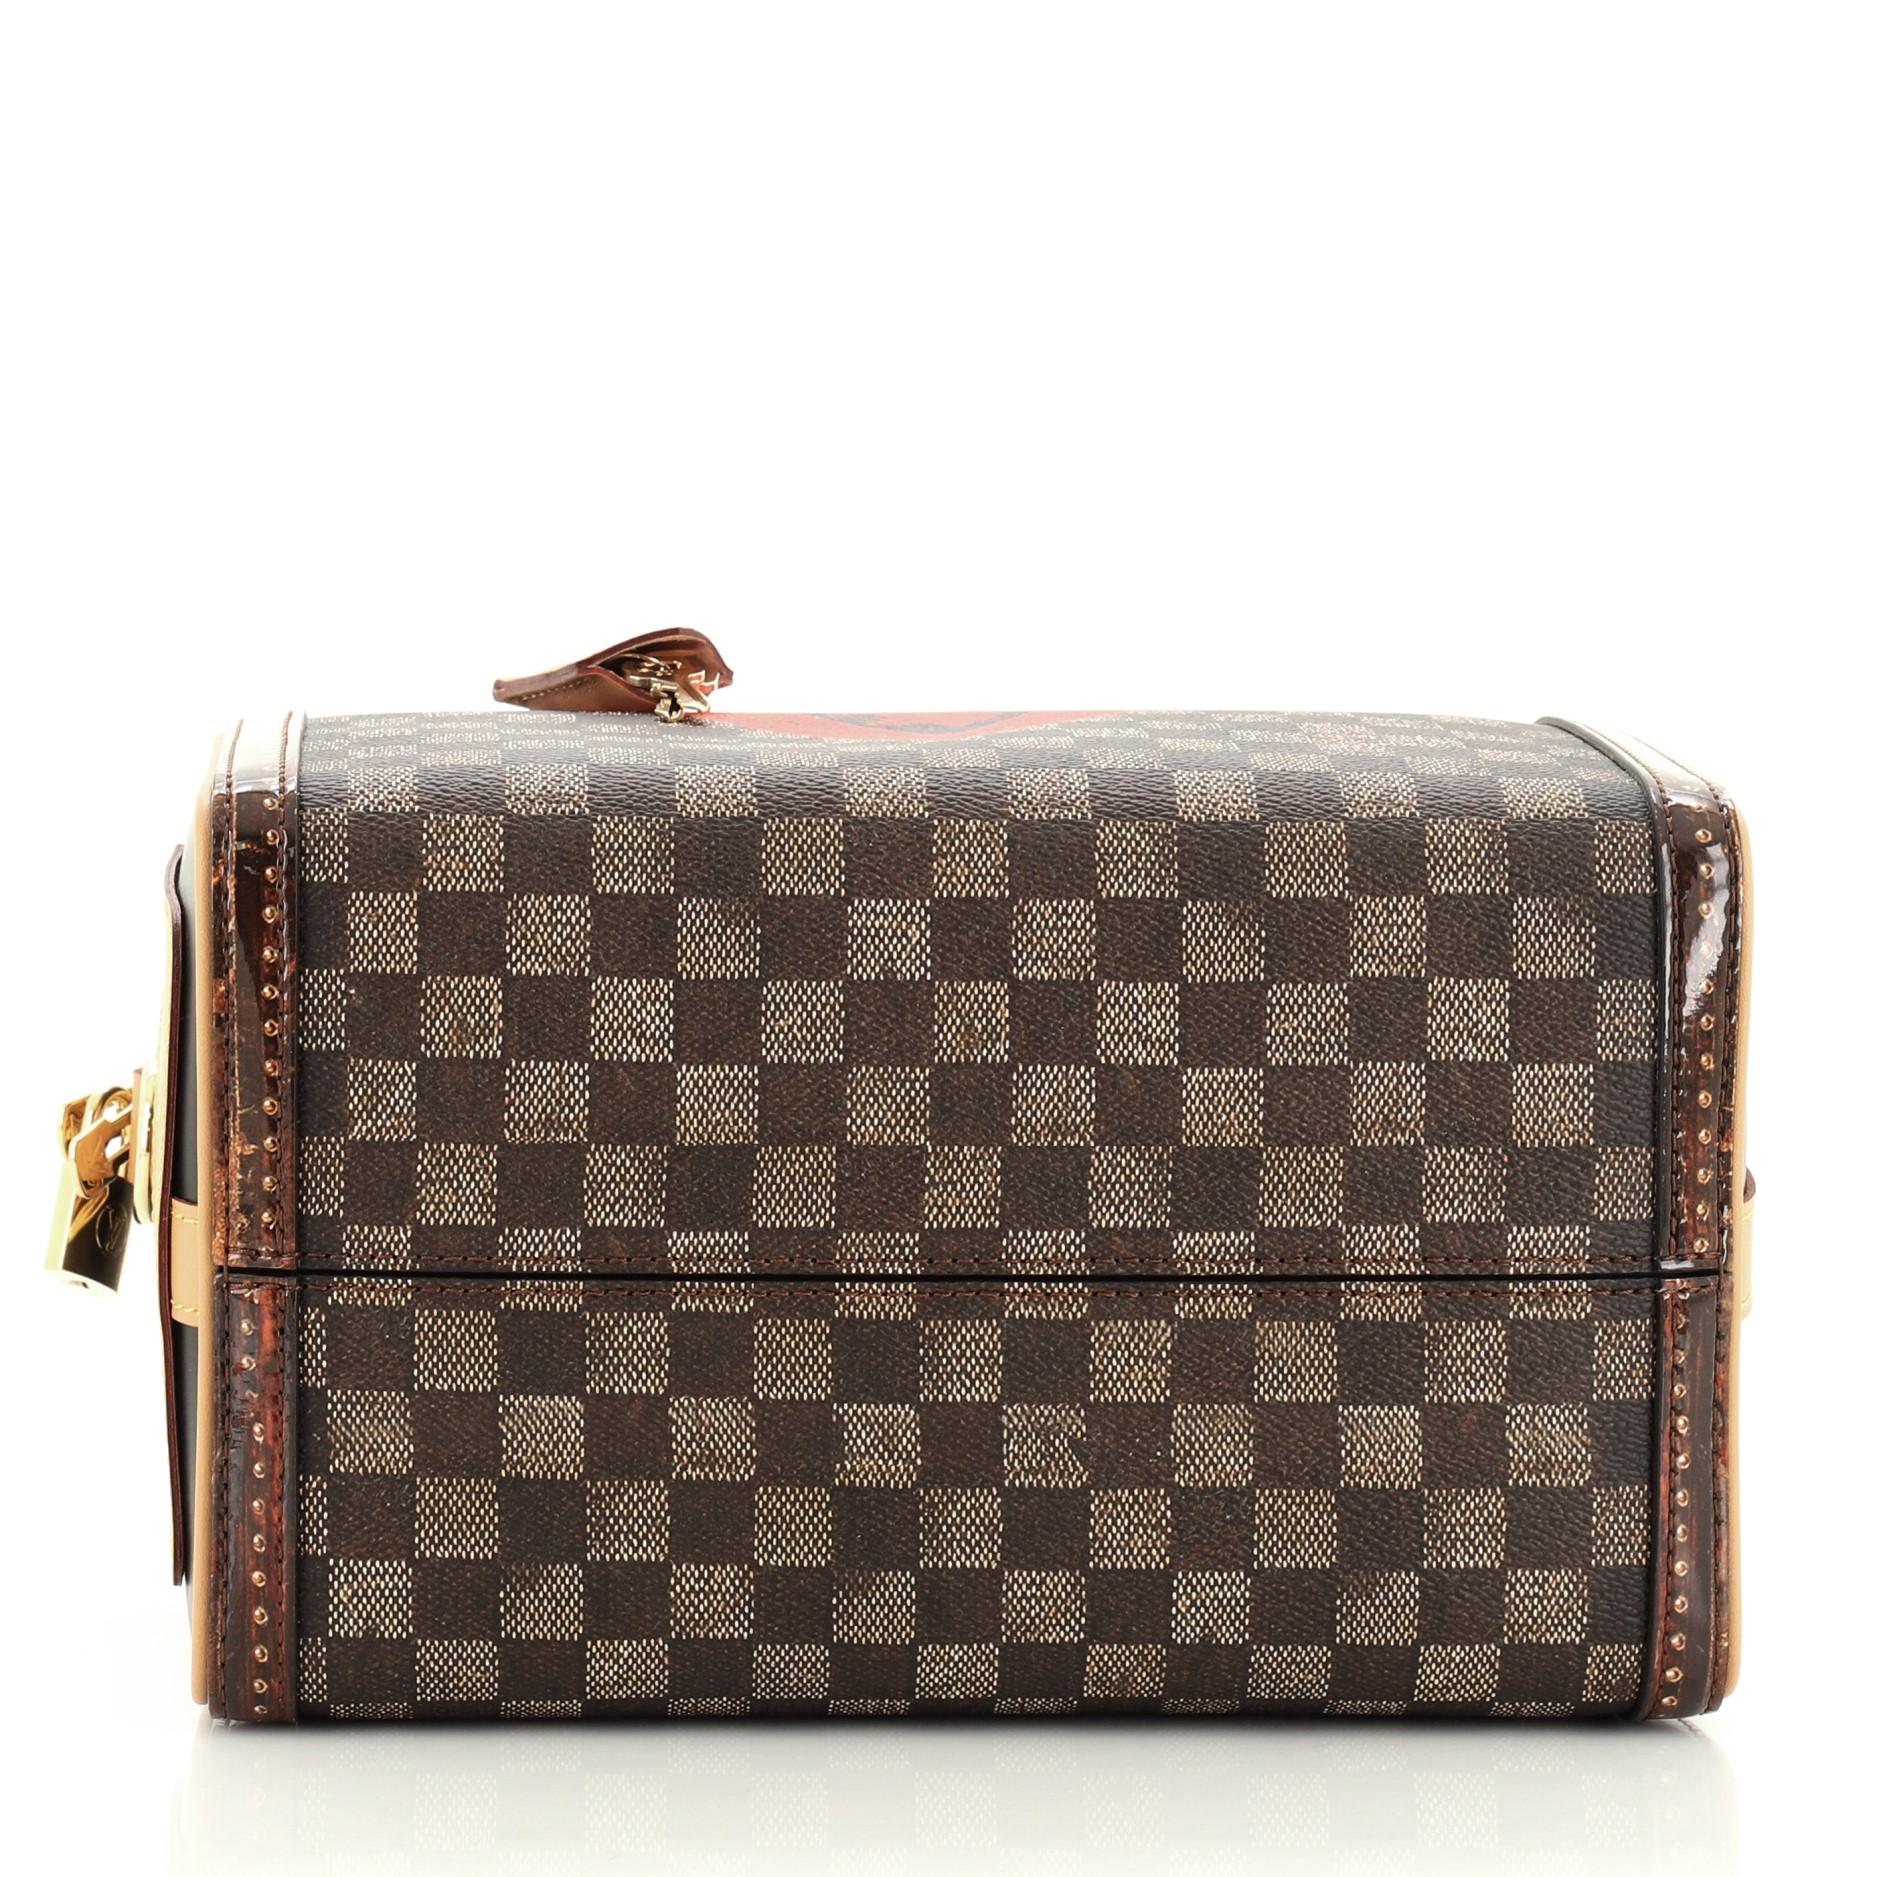 Women's or Men's Louis Vuitton Speedy Bandouliere Bag Limited Edition Damier Time Trunk 25